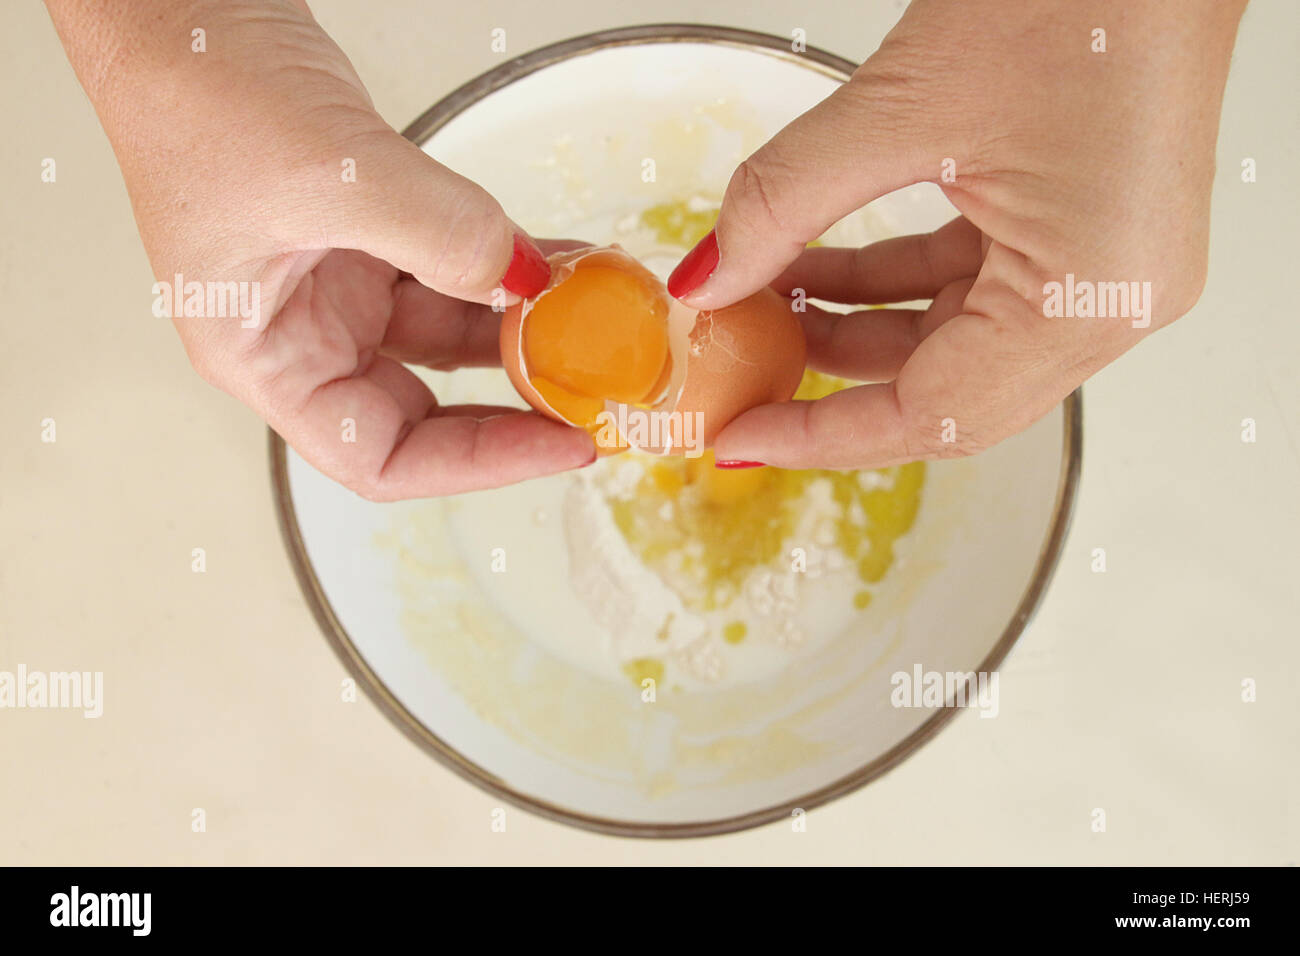 https://c8.alamy.com/comp/HERJ59/woman-cracking-an-egg-into-bowl-of-flour-HERJ59.jpg